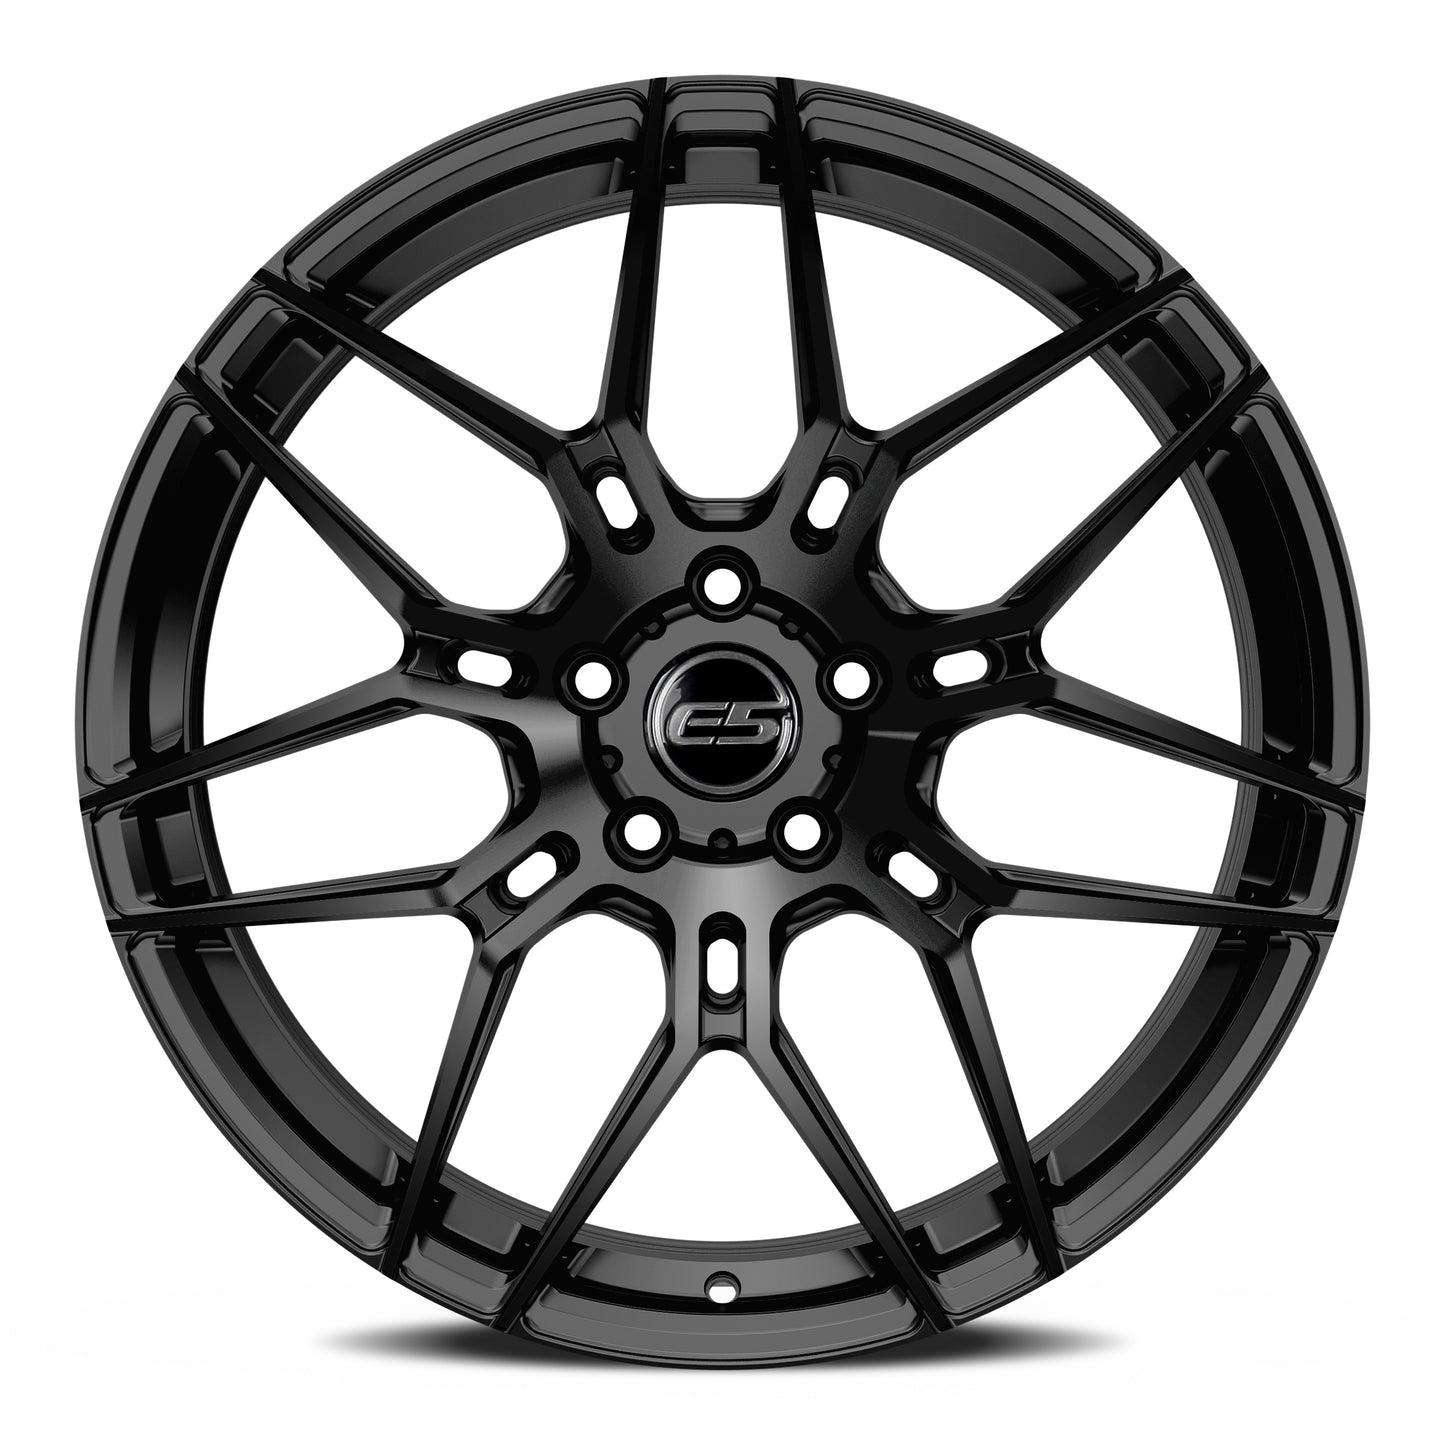 C8 Corvette E5 Speedway Wheels - Gloss Black (face)